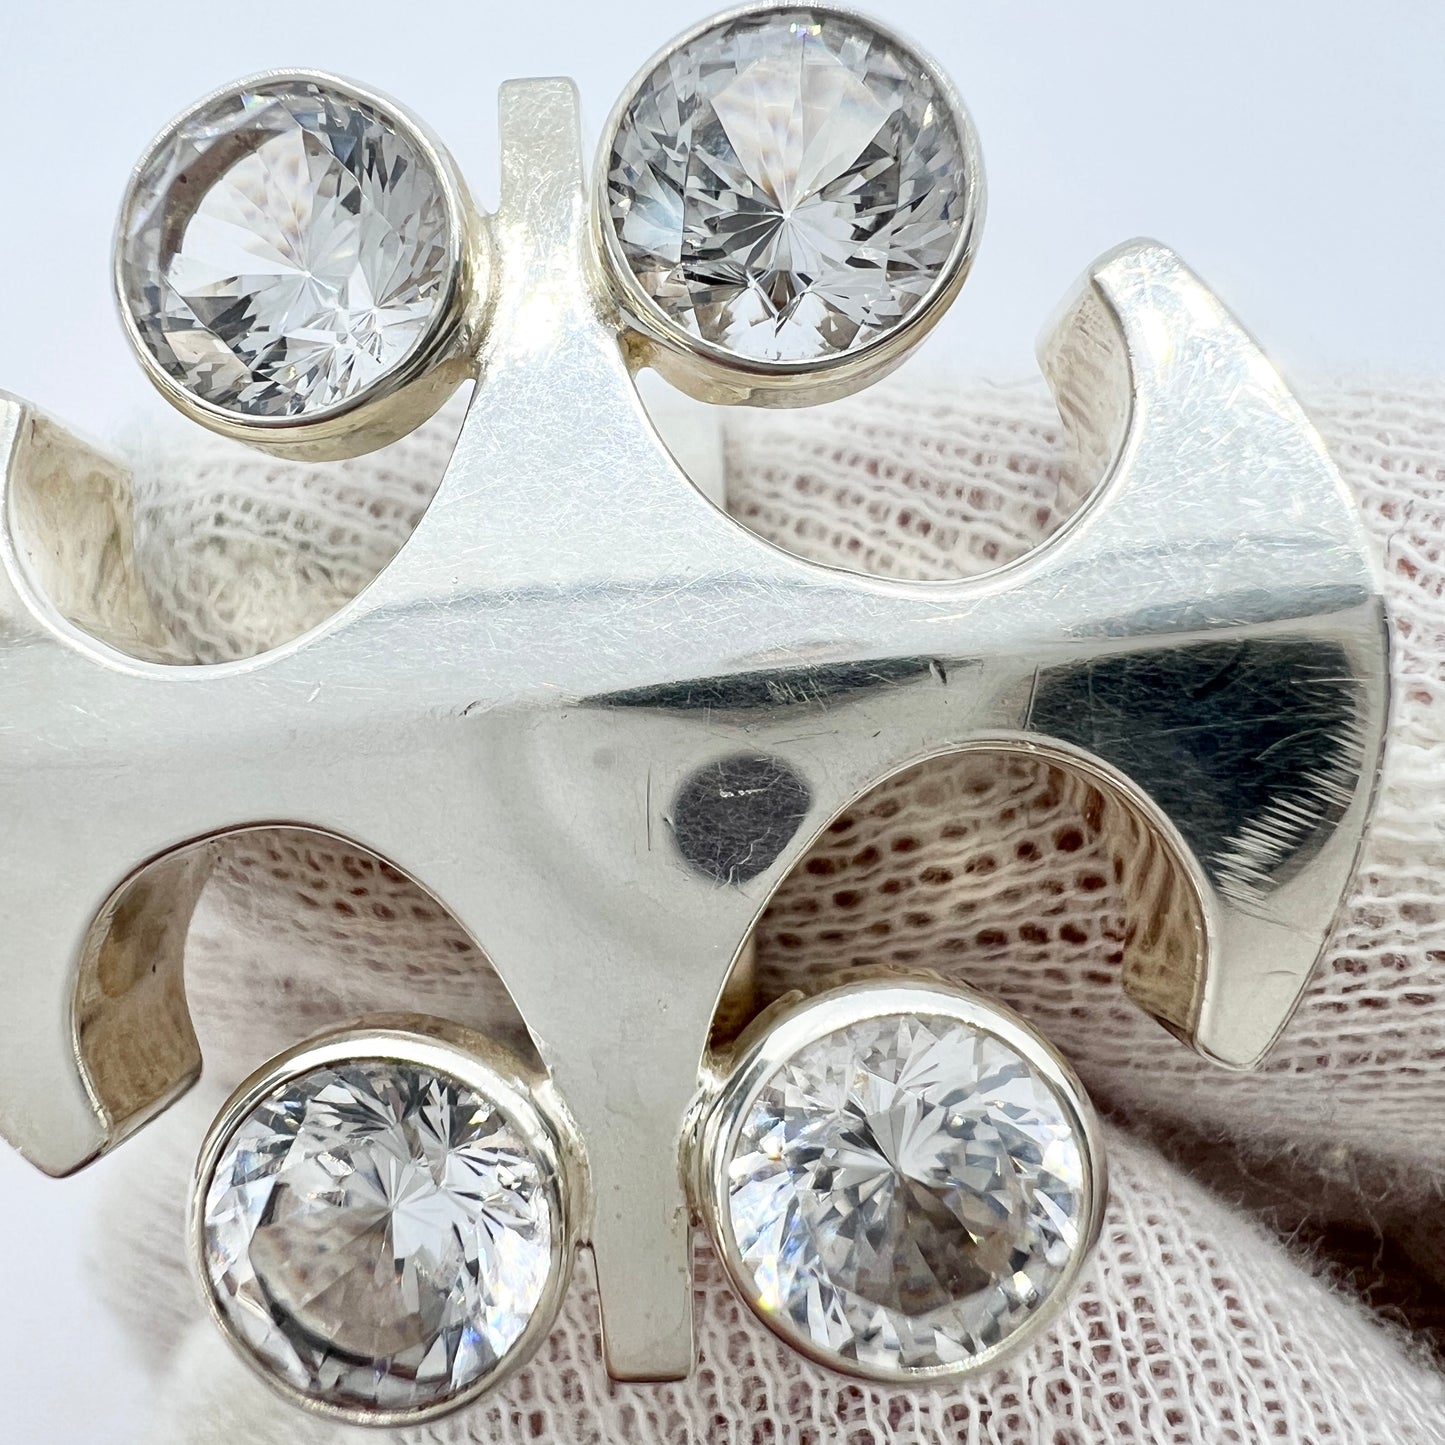 Salovaara, Finland 1972. Bold Vintage Sterling Silver Rock Crystal Ring.